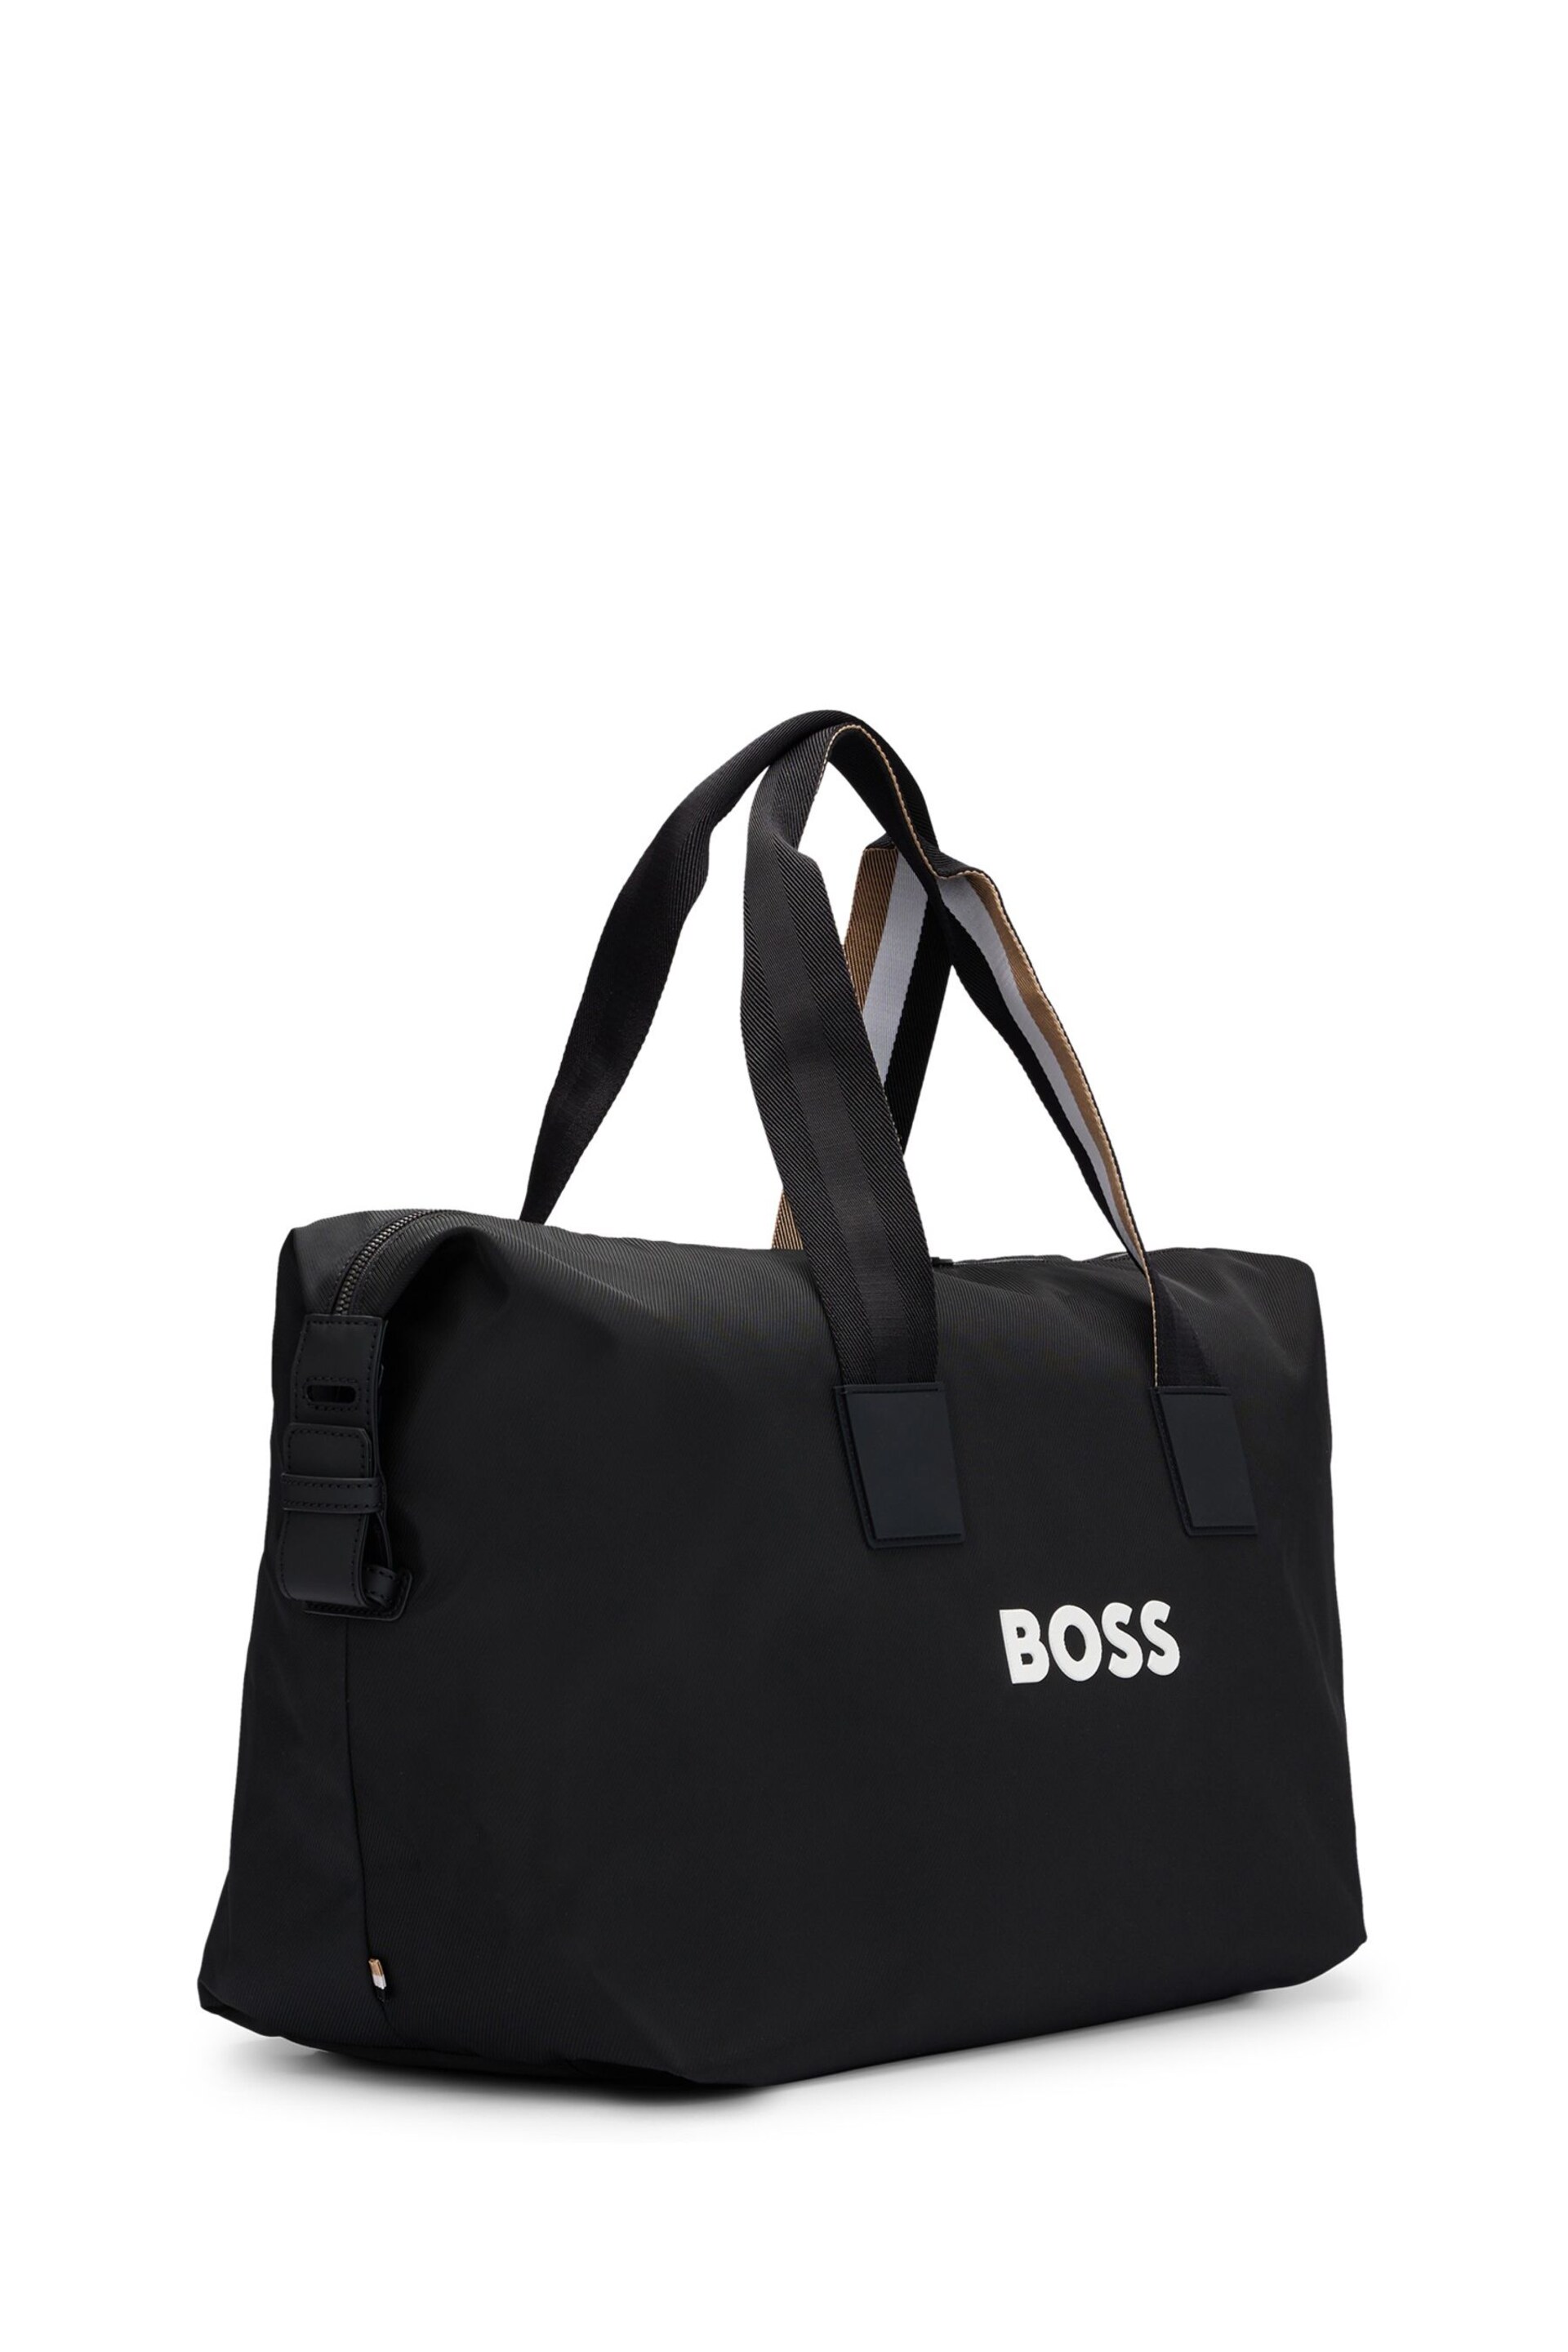 BOSS Black Contrast Logo Holdall Bag - Image 3 of 5